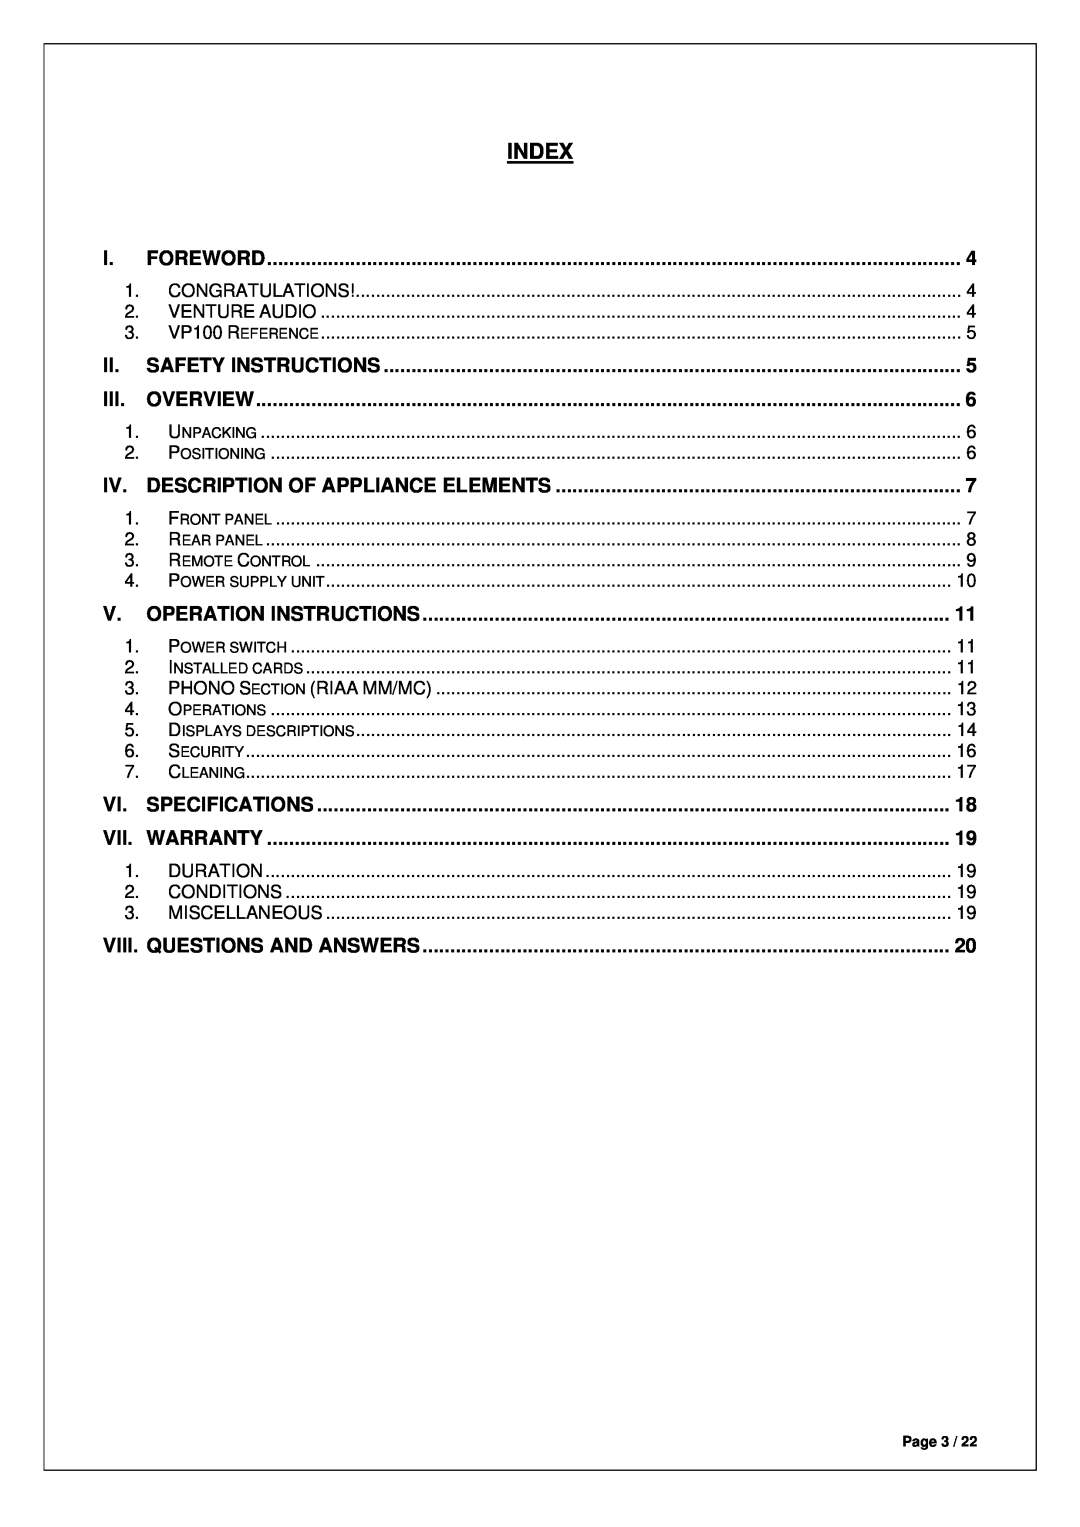 Venture Products VP100 manual Index 